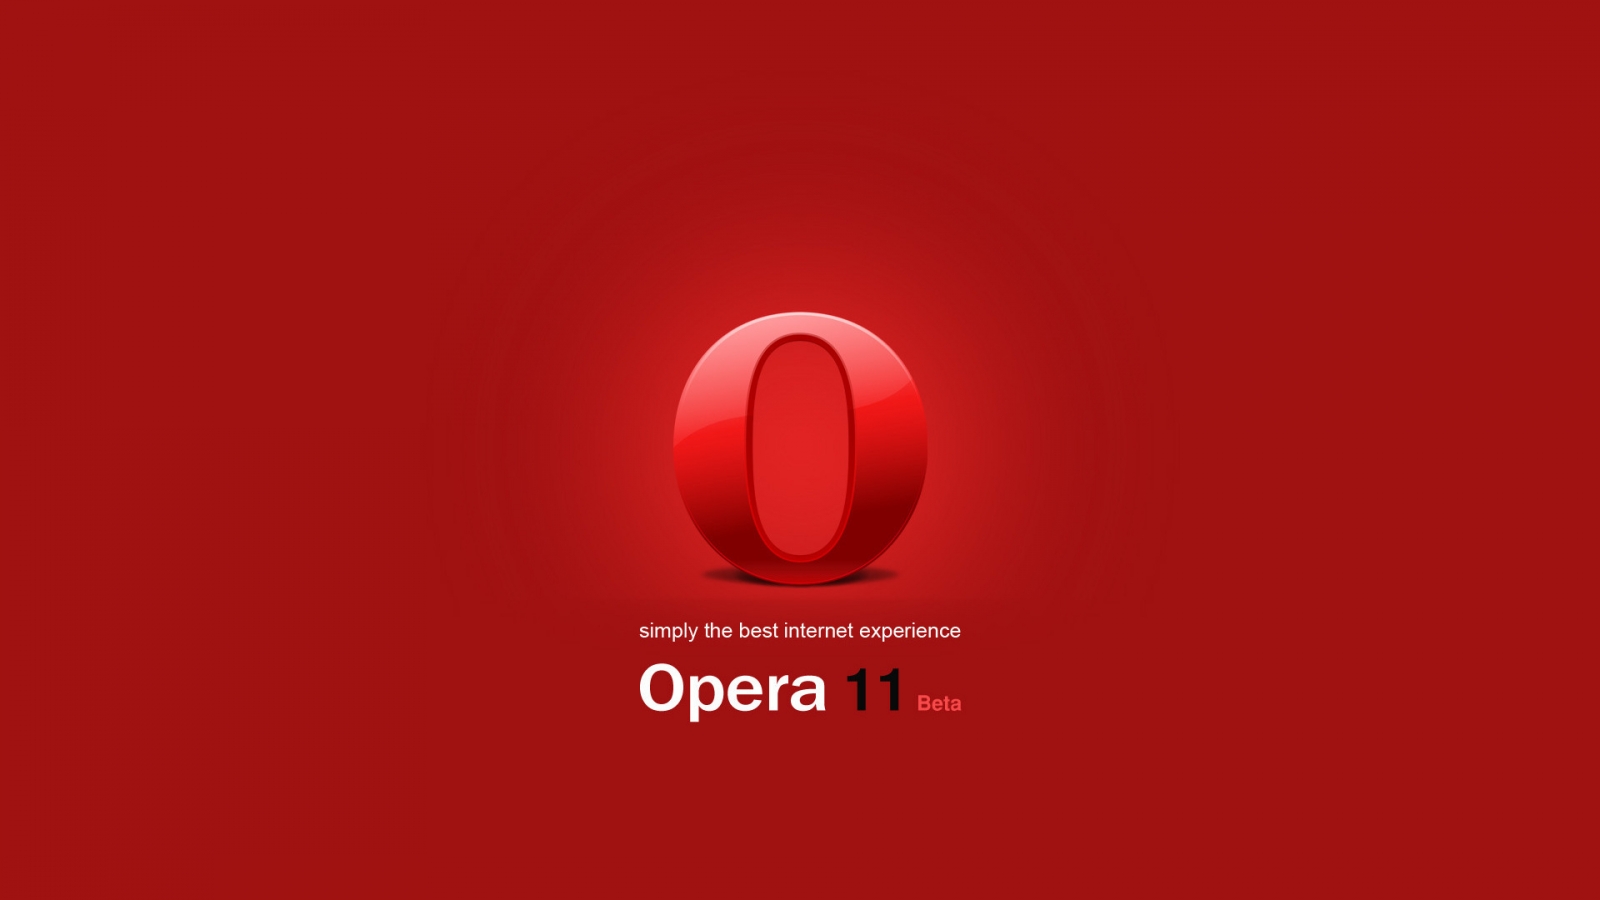 Opera 11 Beta for 1600 x 900 HDTV resolution